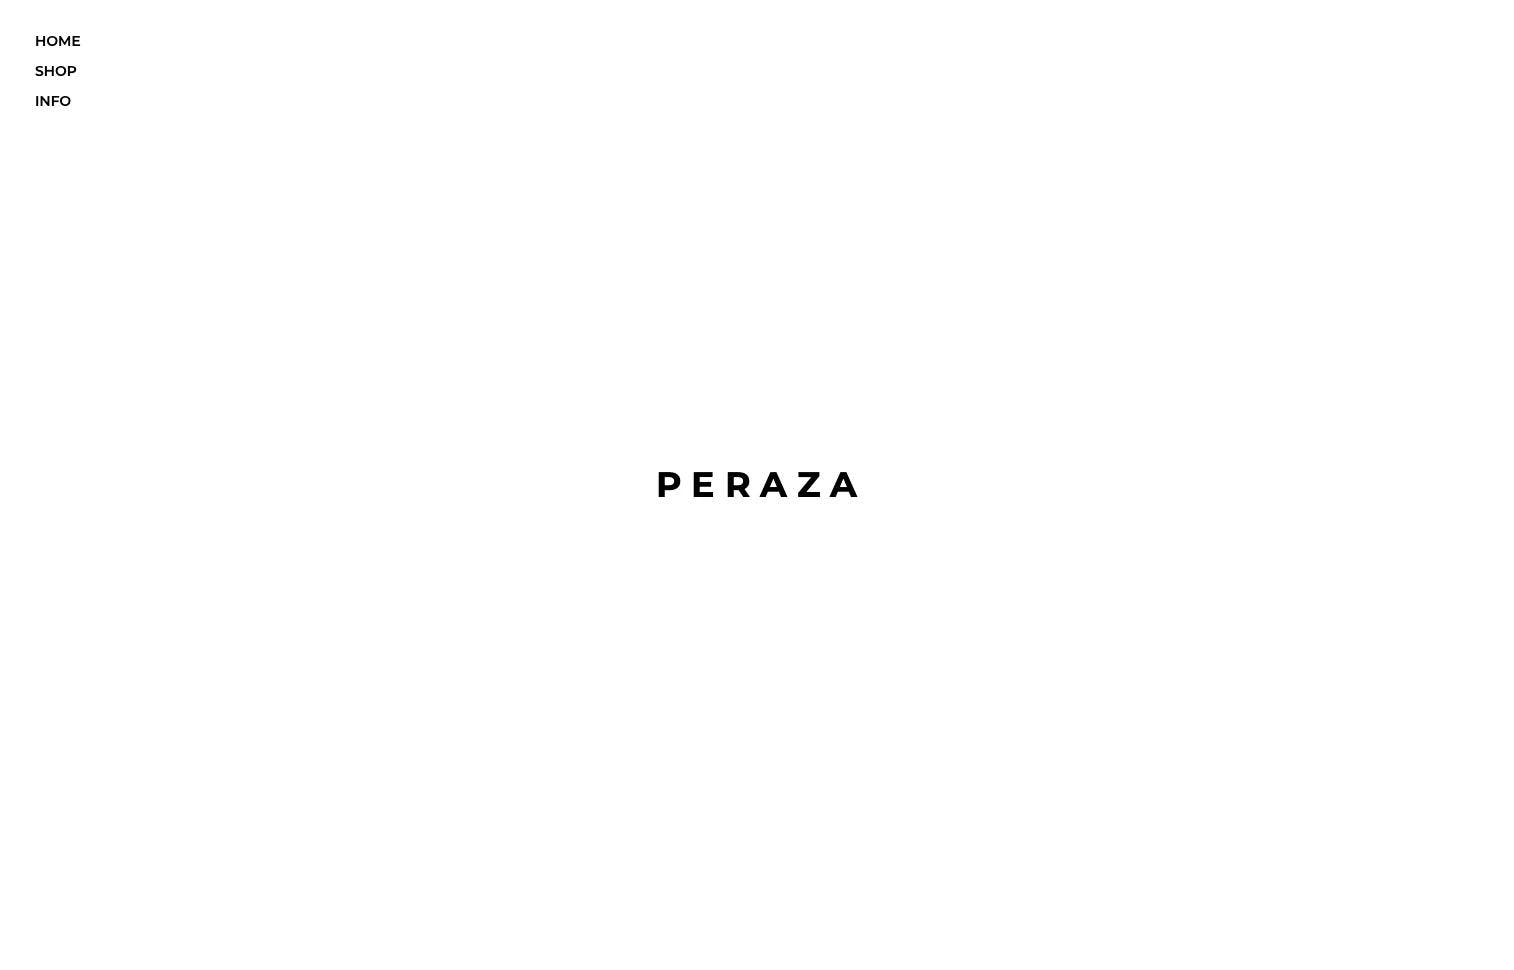 Peraza homepage